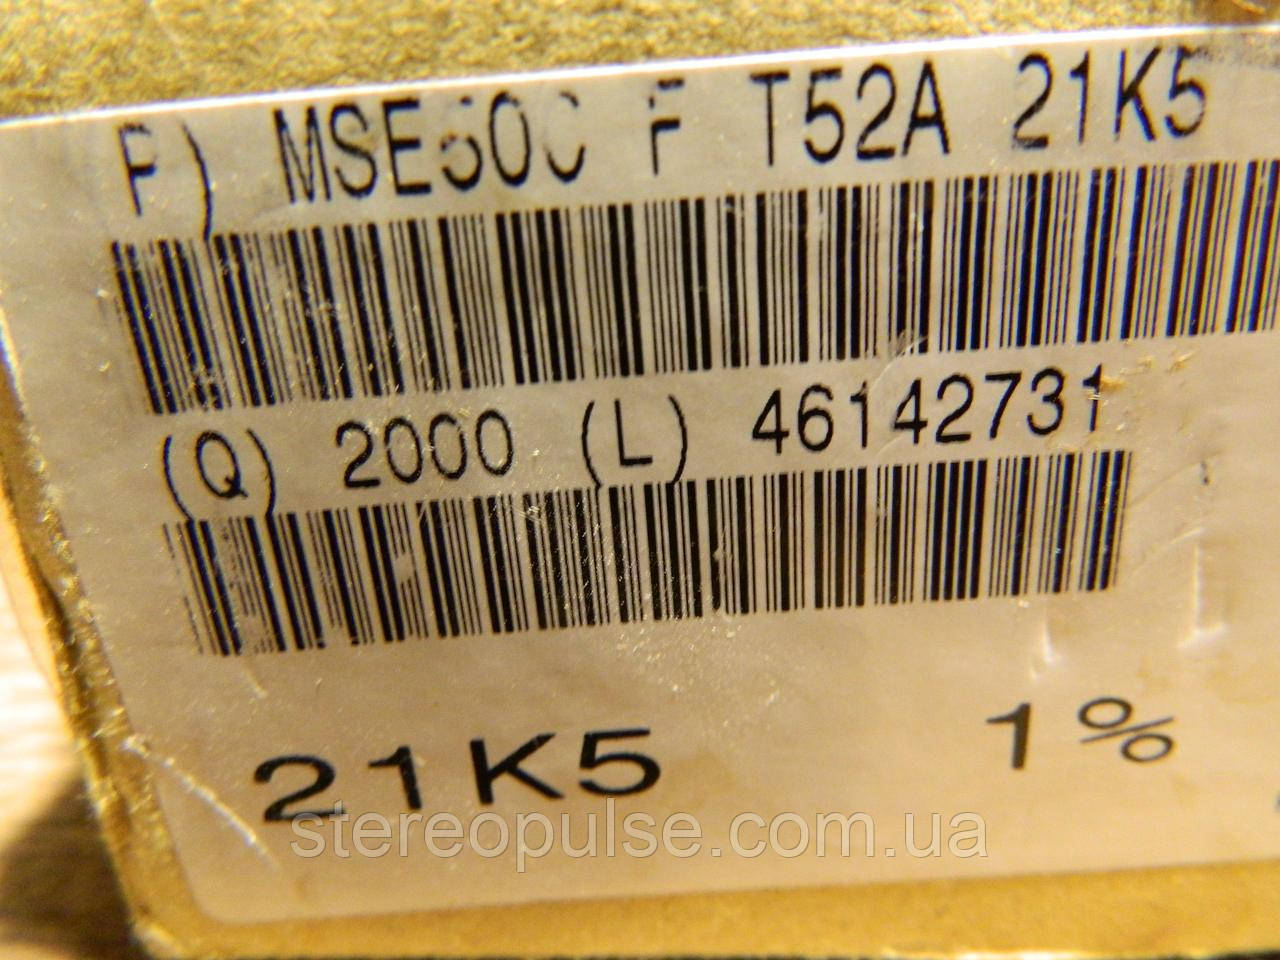 Резистор  MSE50C -21k5   1%   0.6 вт